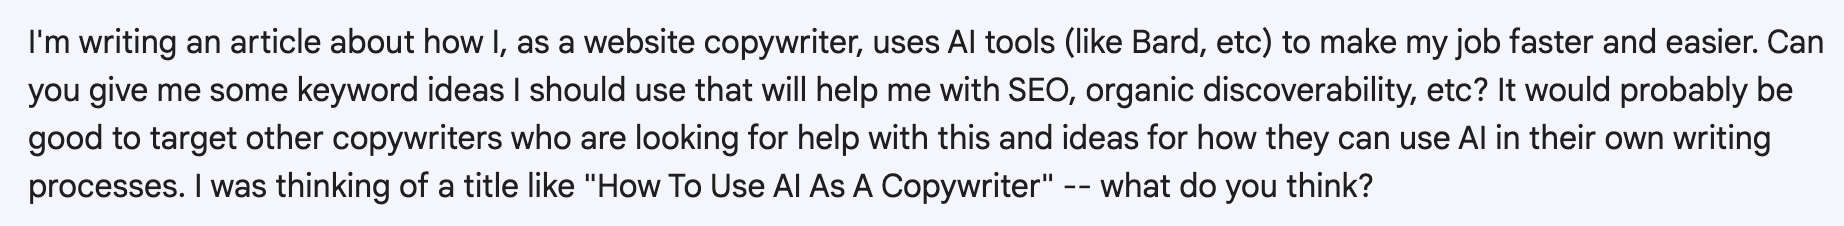 How to use AI as a copywriter